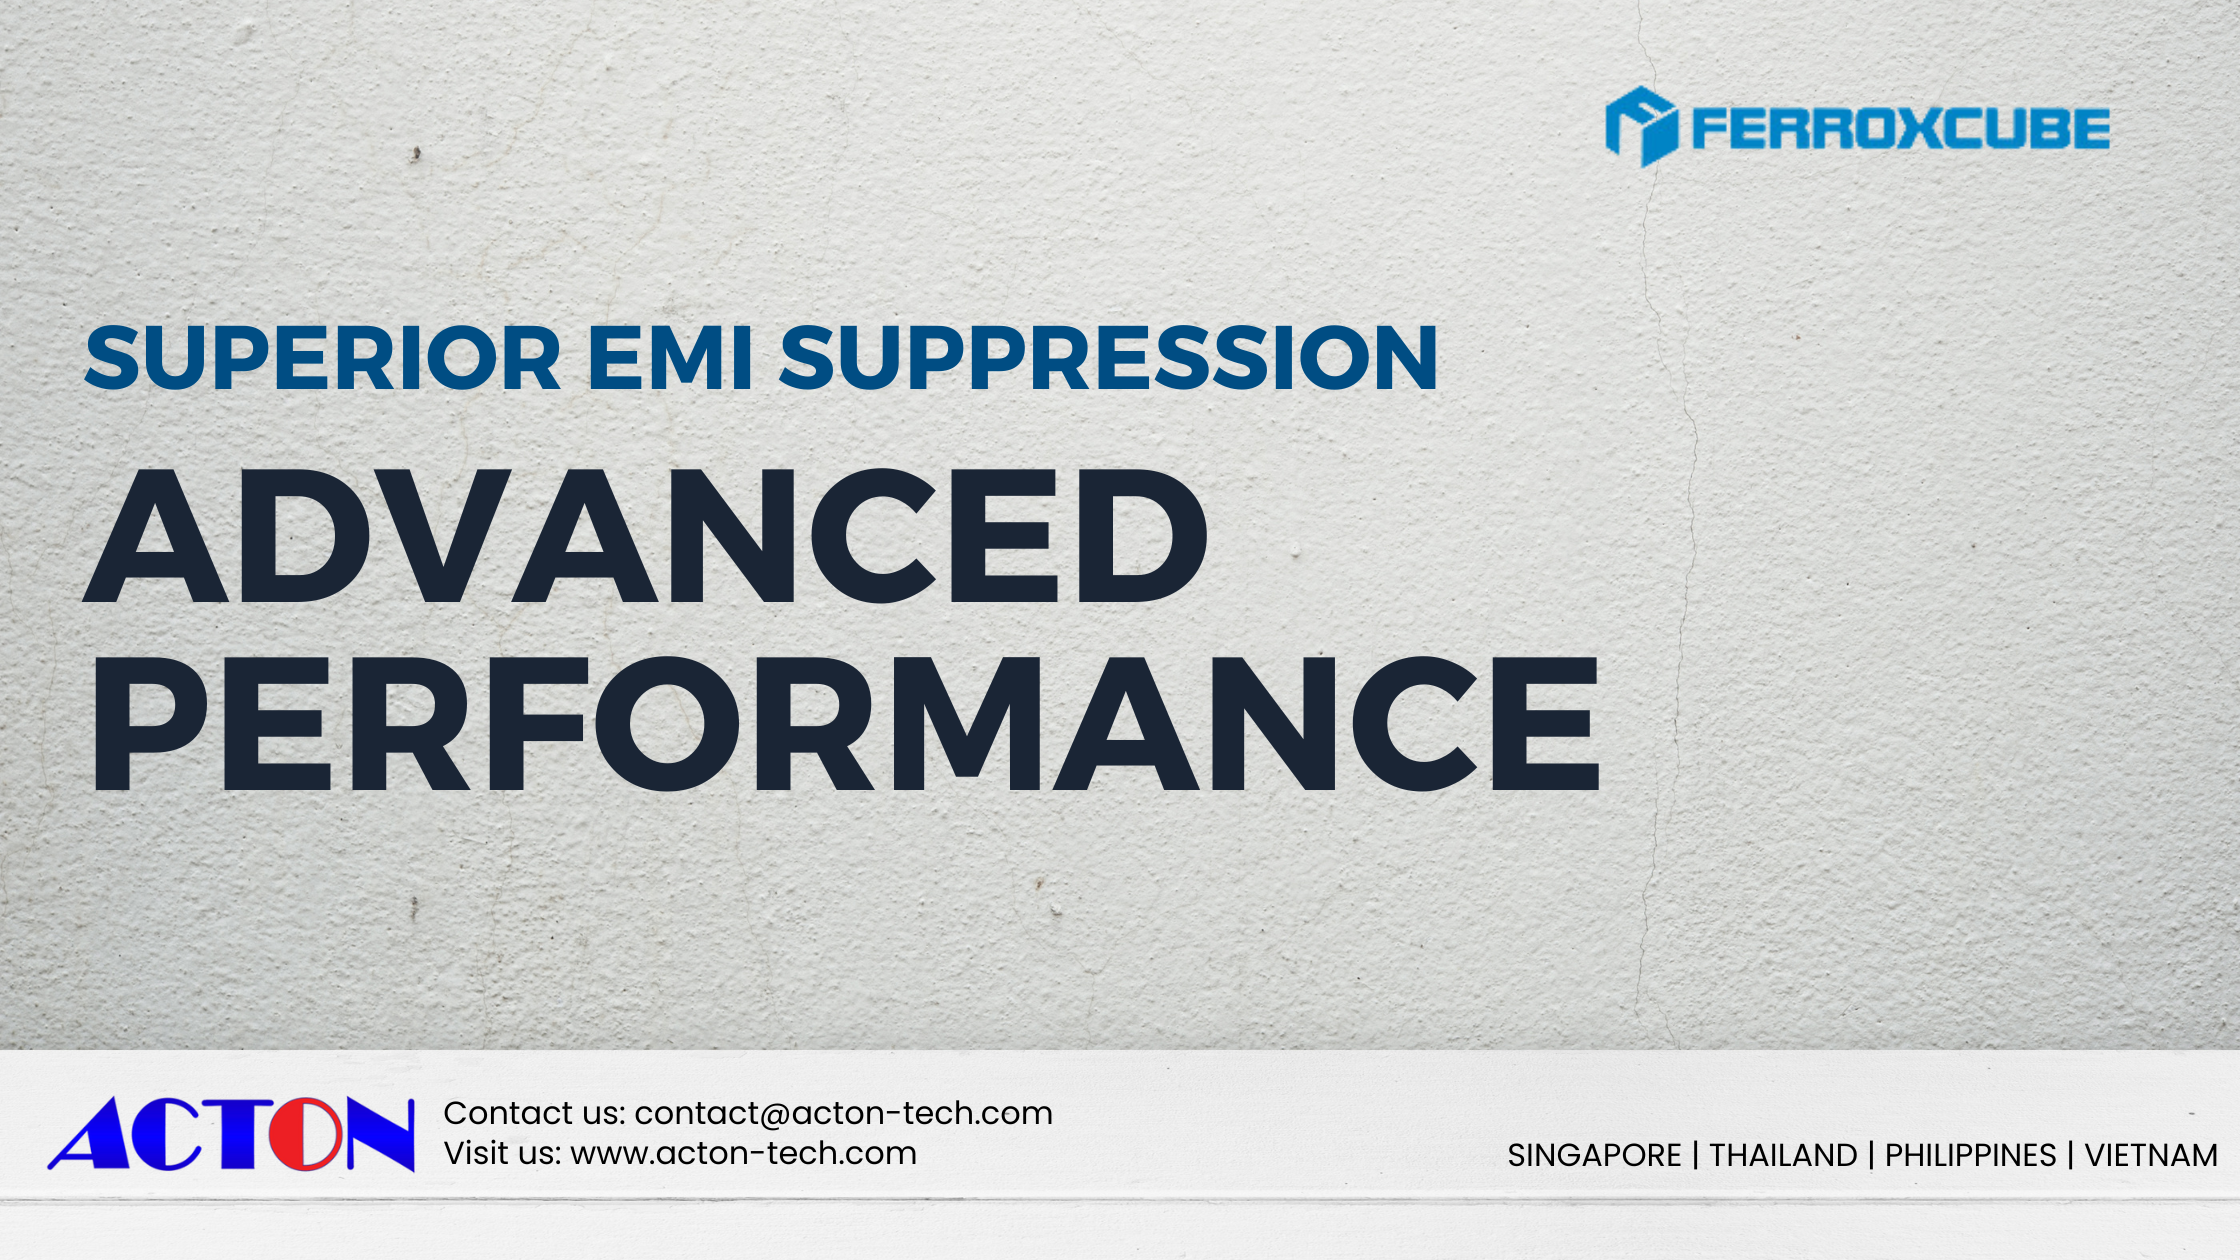 EMI Suppression Ferrite | Applications and Benefits